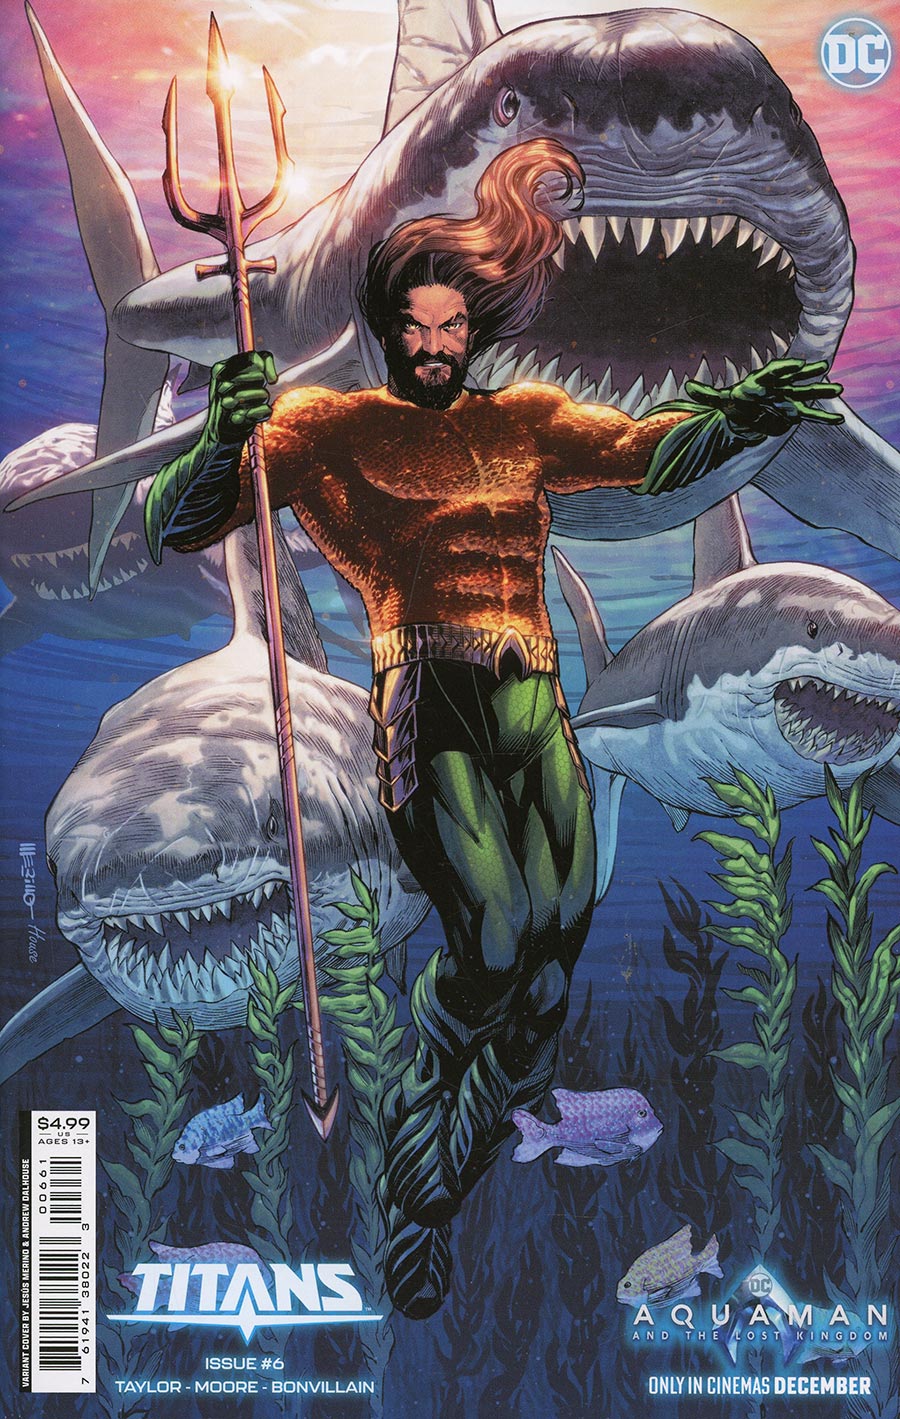 Titans Vol 4 #6 Cover D Variant Jesus Merino Aquaman And The Lost Kingdom Card Stock Cover